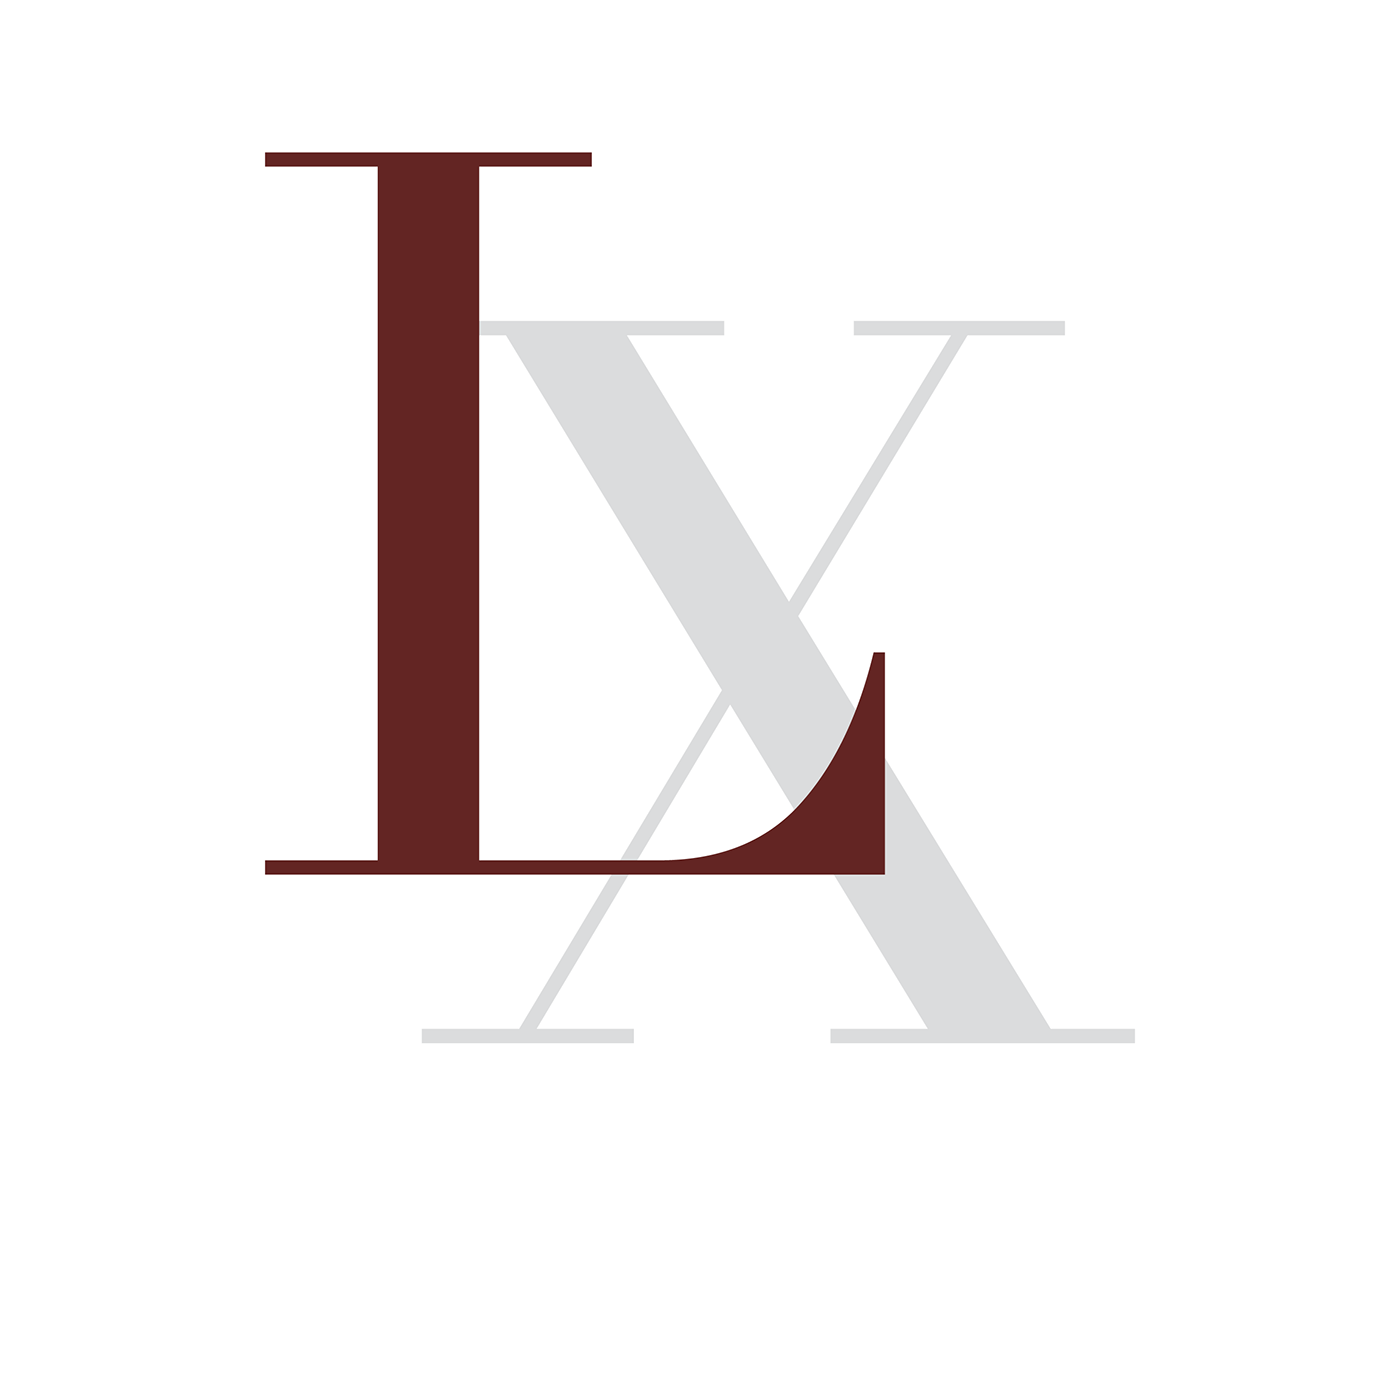 lennox-system-logo-behance